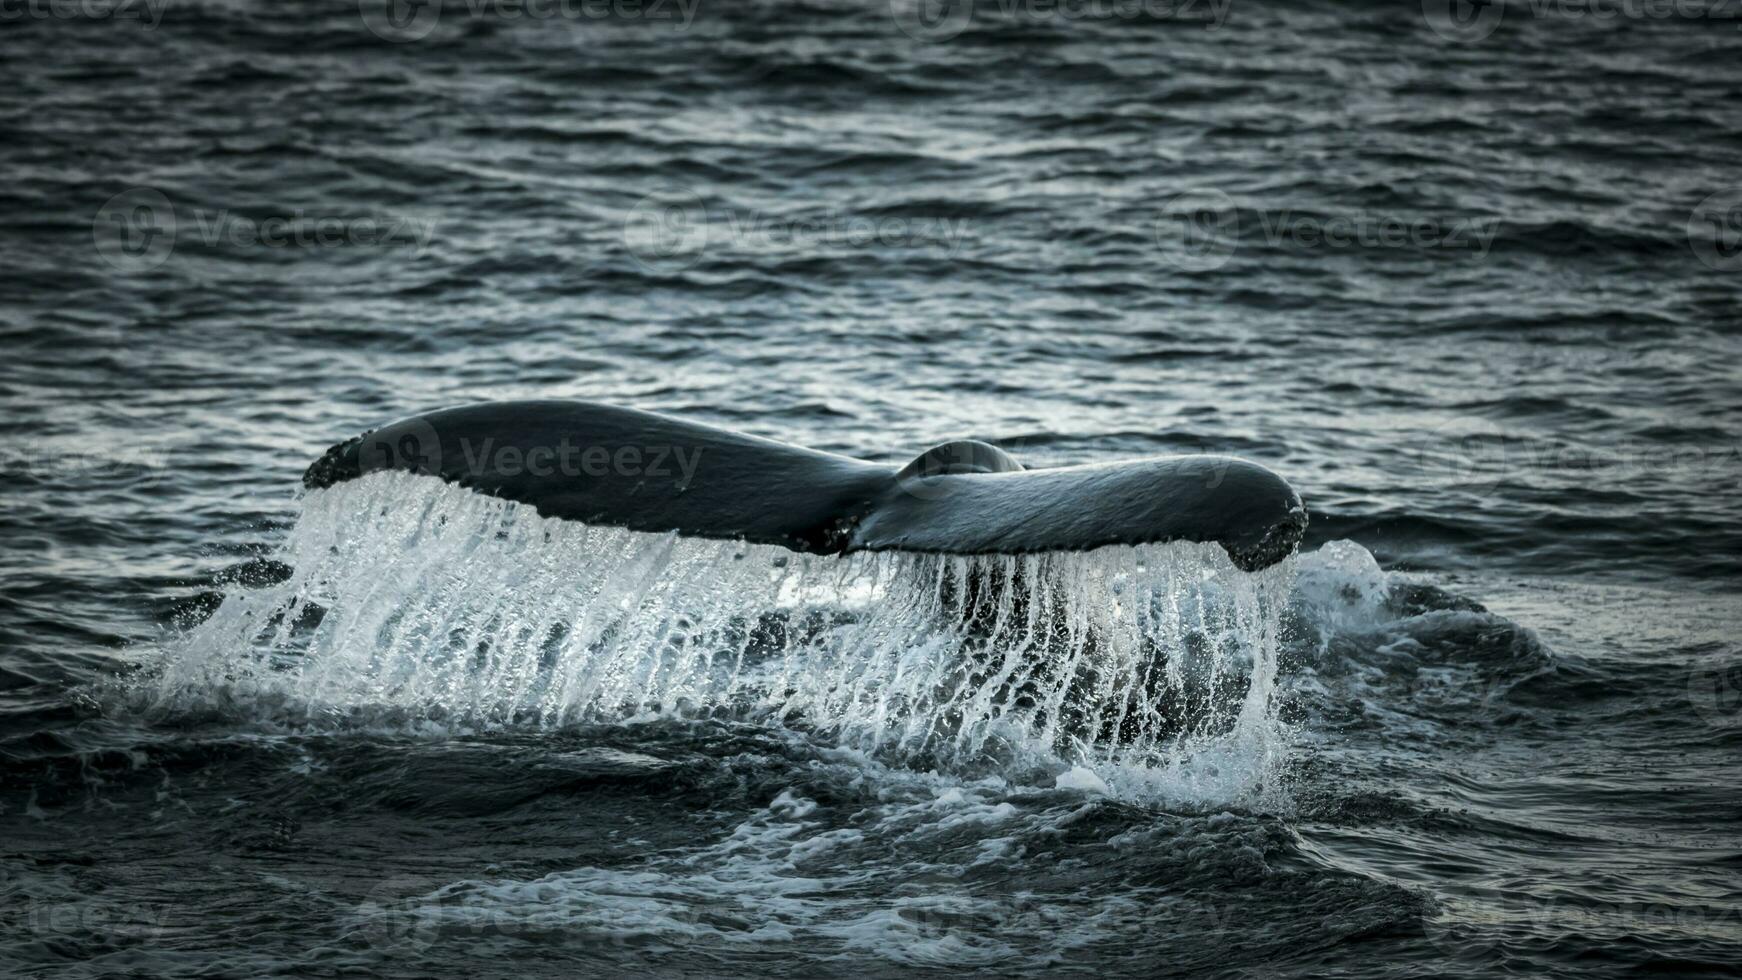 gobba balena immersioni, megatteri novaeangliae,antrtica. foto